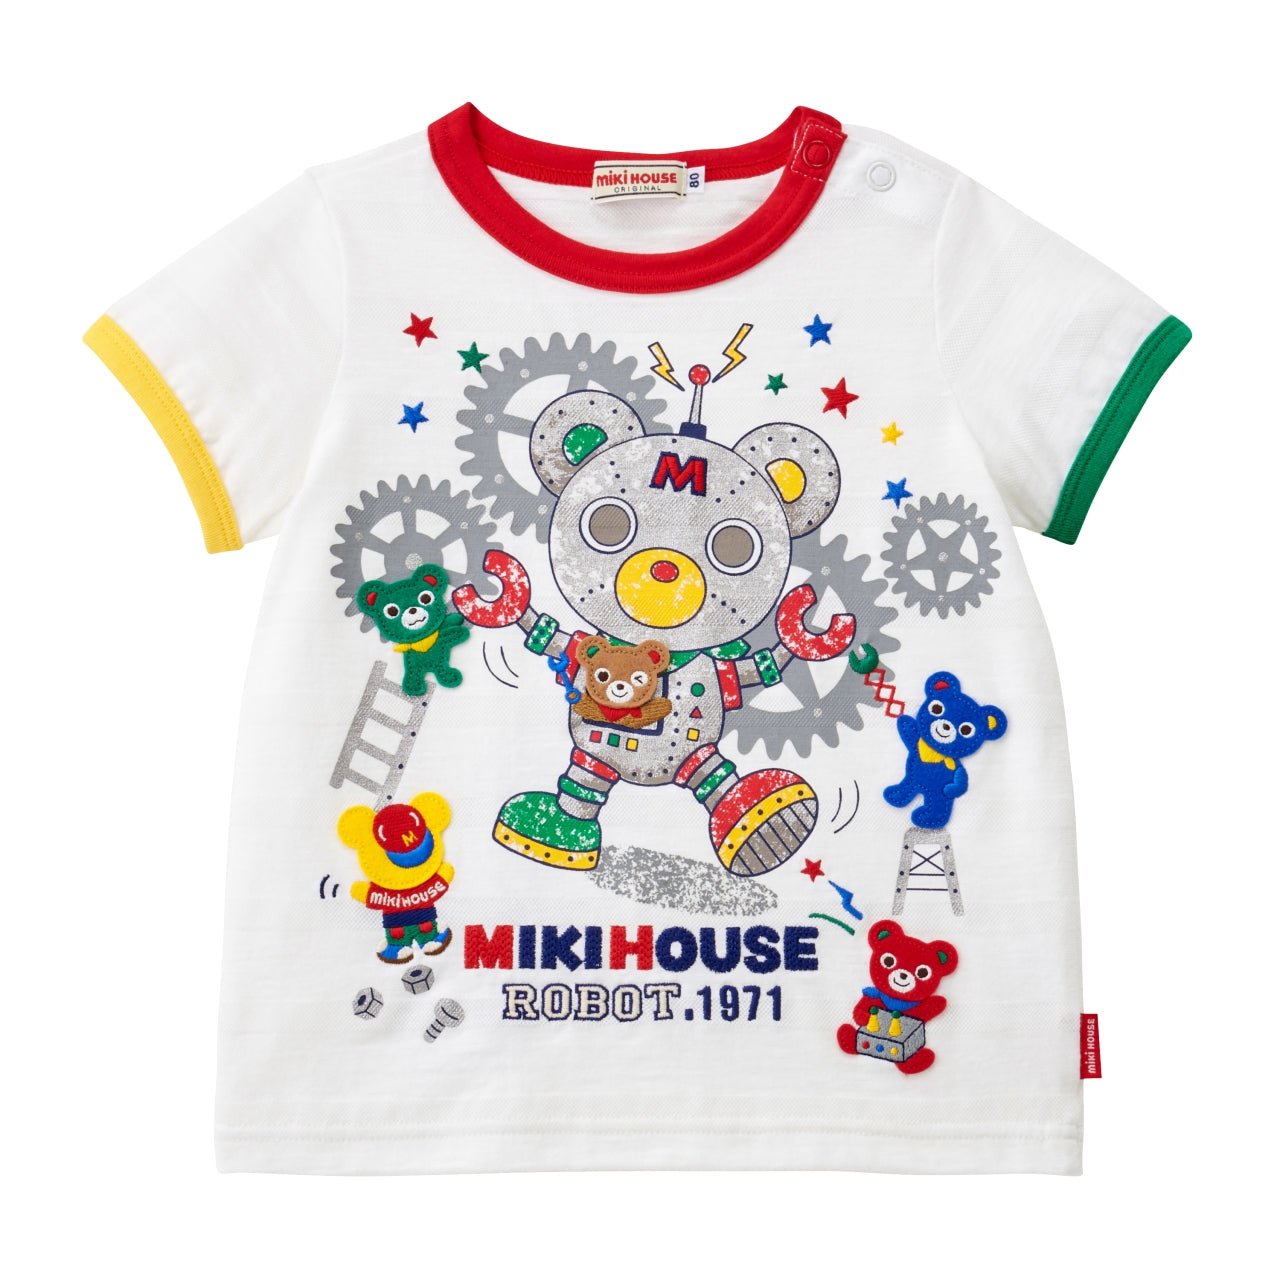 MIKI HOUSE Robot Factory T-Shirt - 12-5206-578-01-90